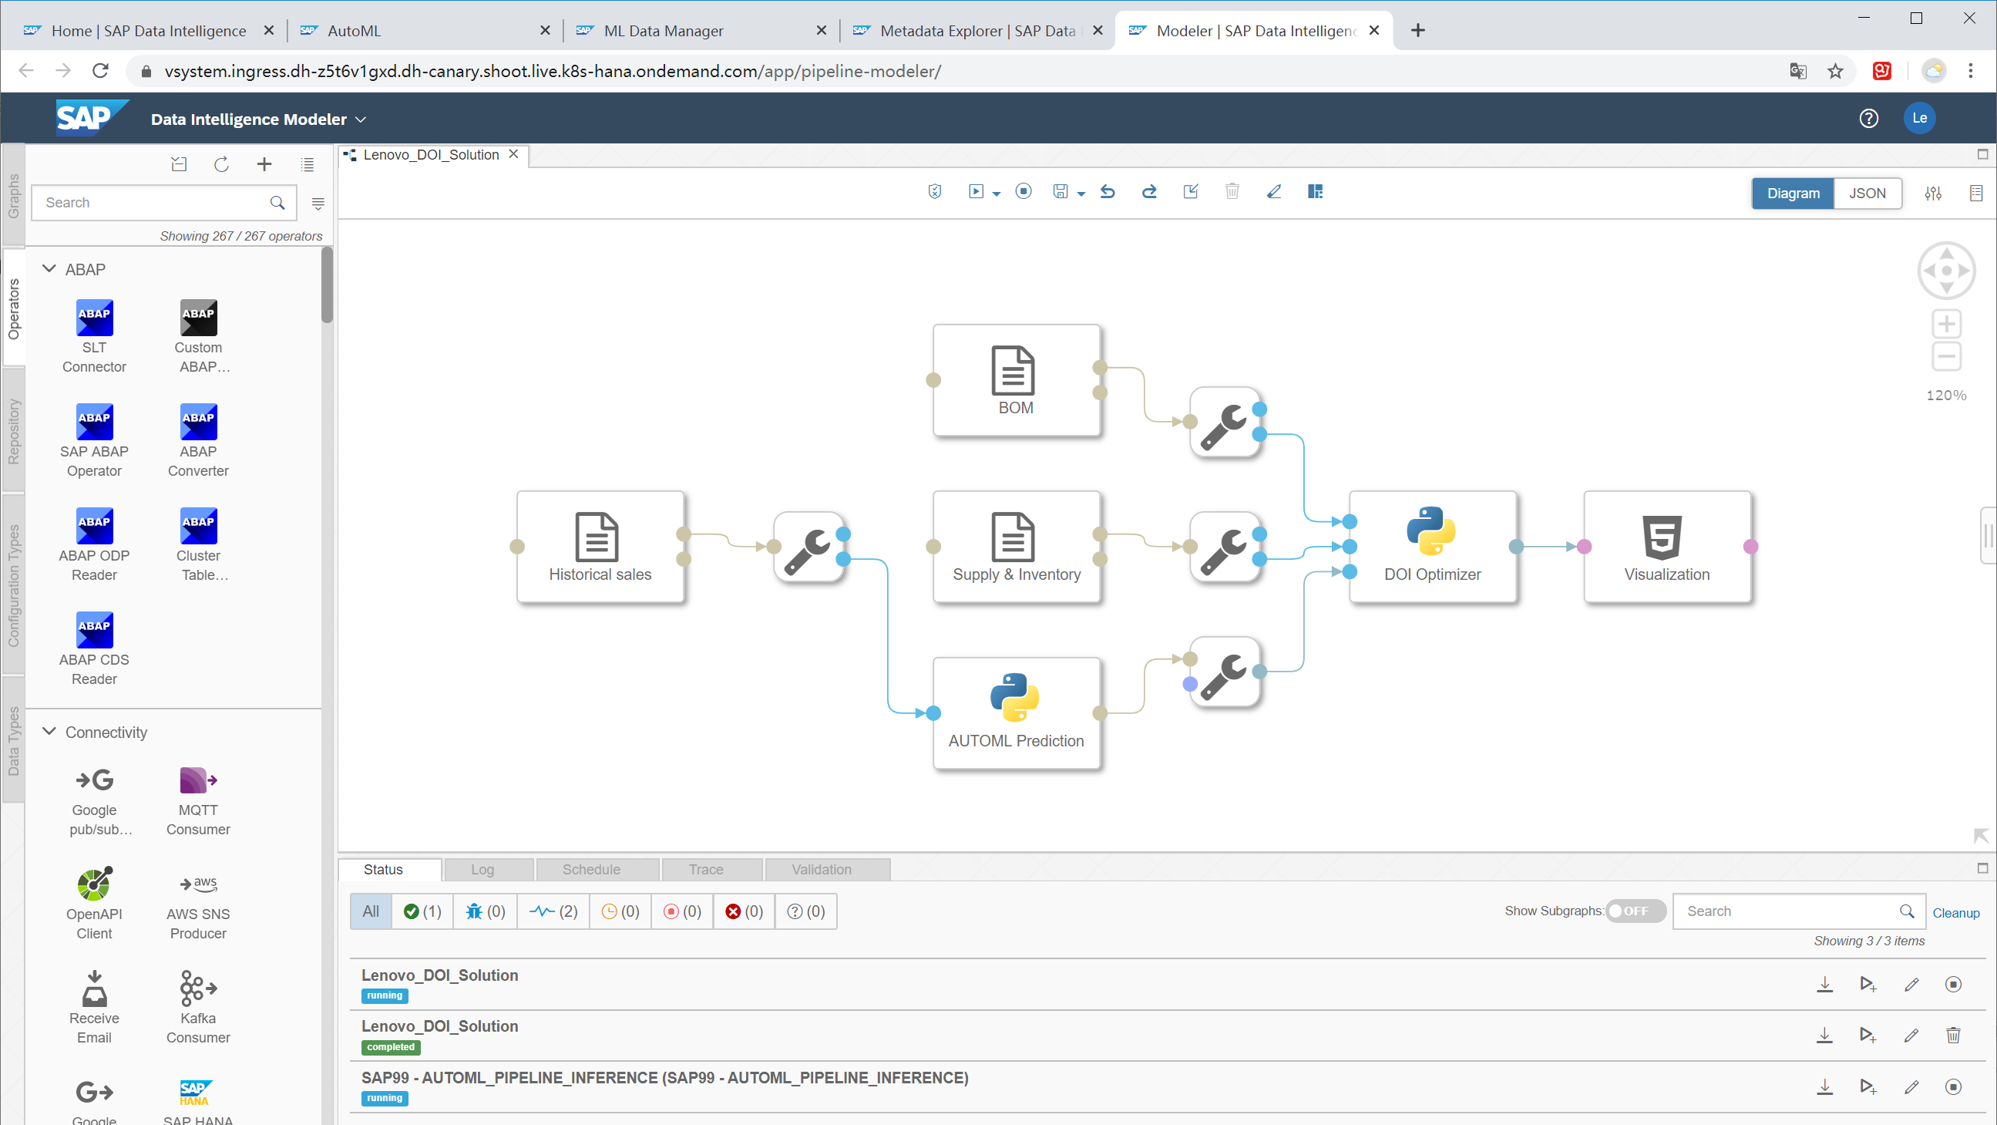 Lenovo Optimization Solution for Manufacturing Inventory built on SAP Data Intelligence